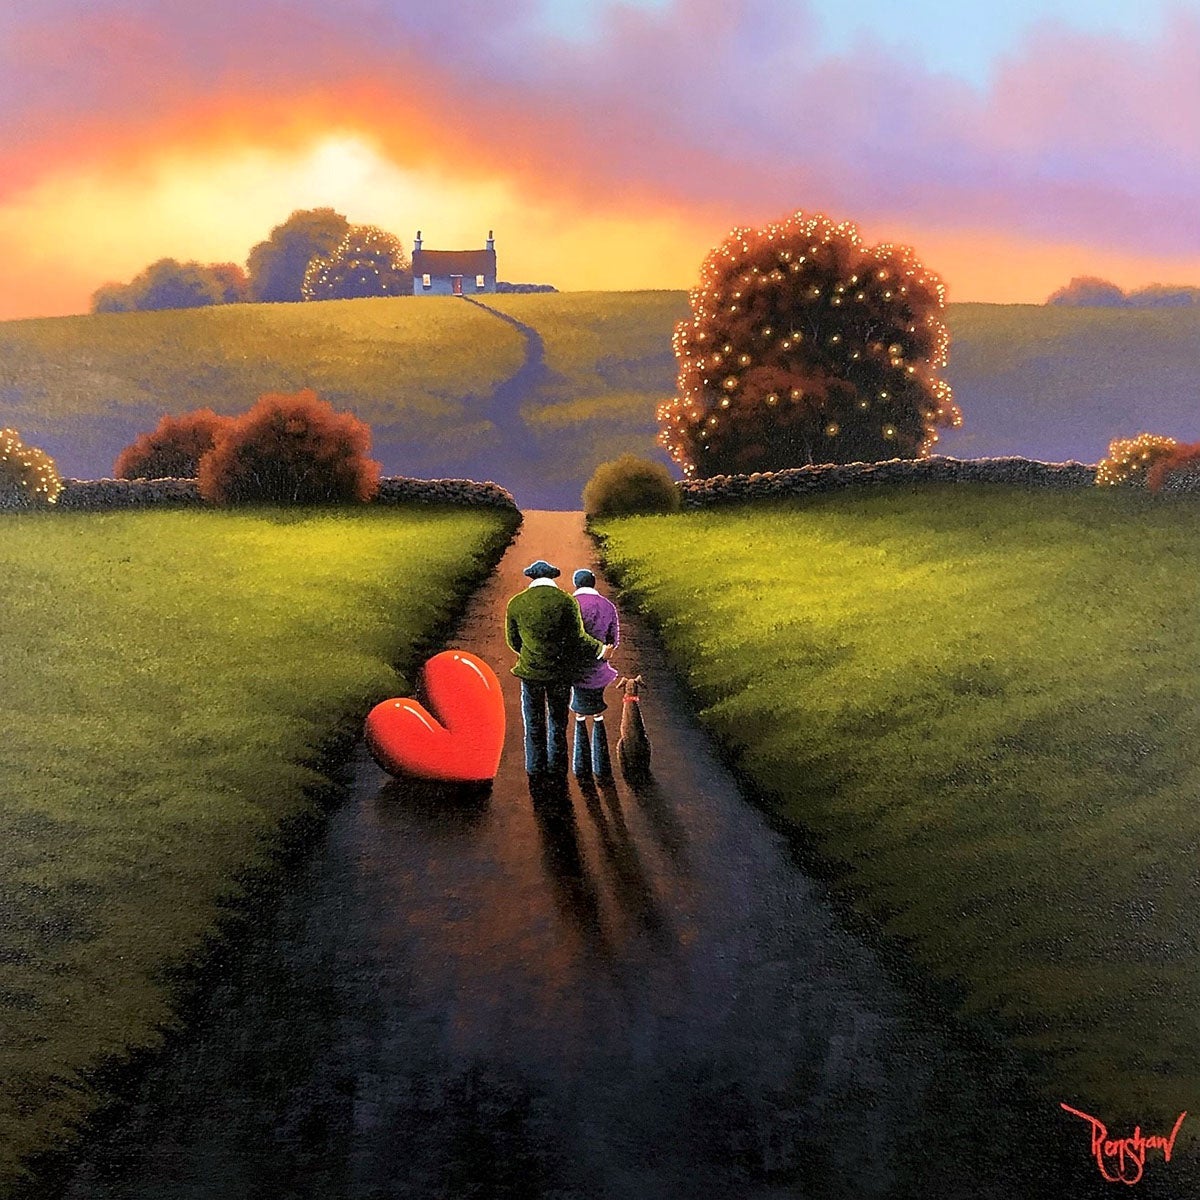 The Valley to Love - Original David Renshaw Original